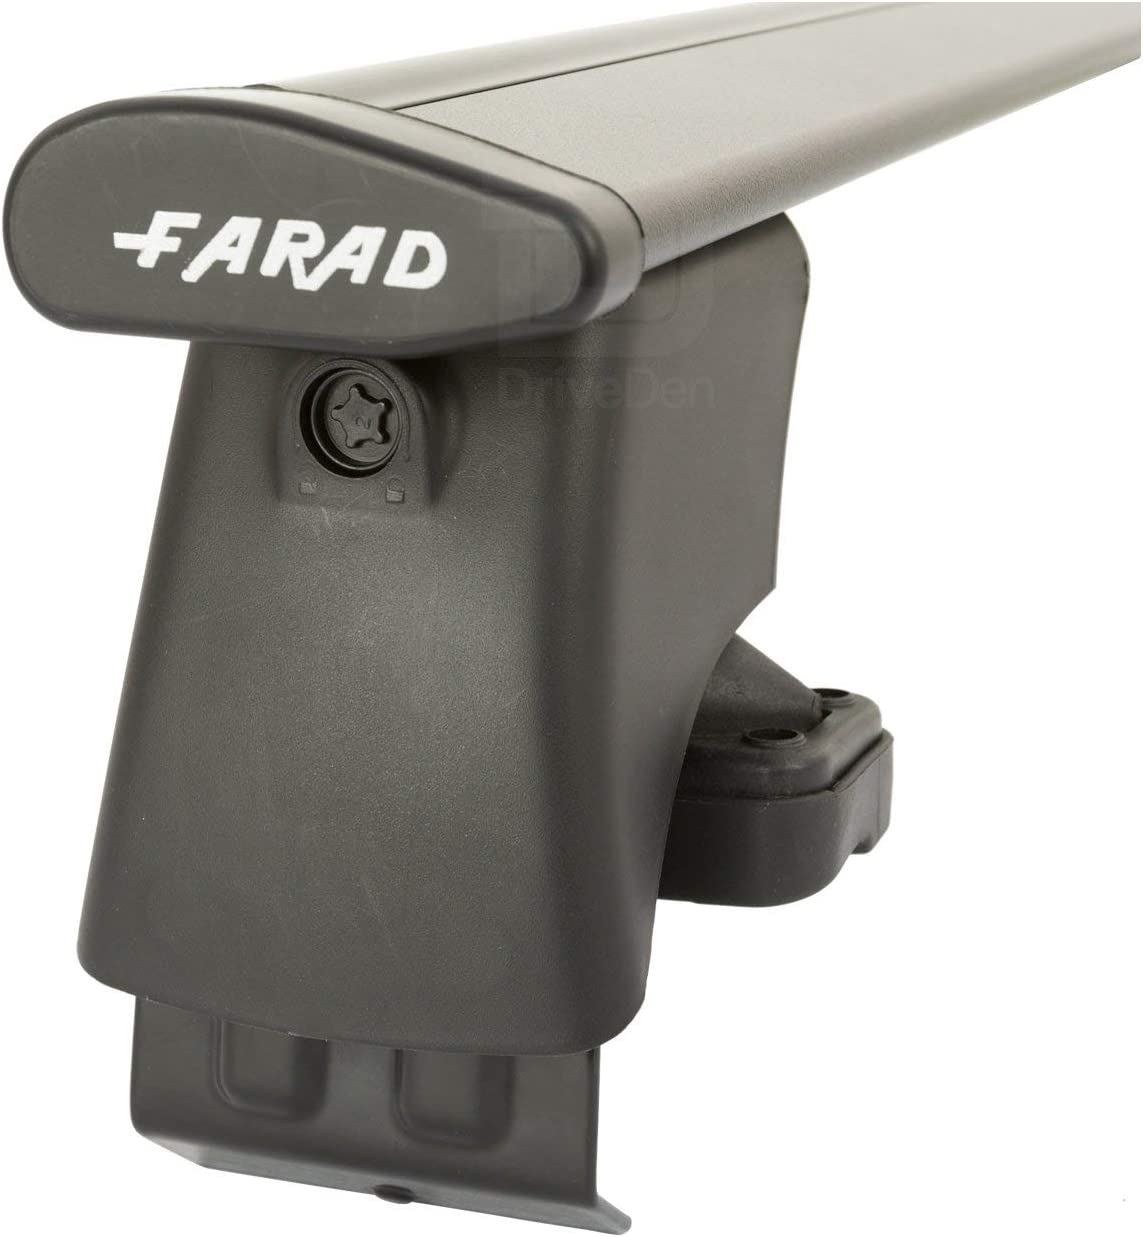 FARAD-Kit H2 per barre portatutto - Daewoo Matiz 1998-2005 (senza corrimano)